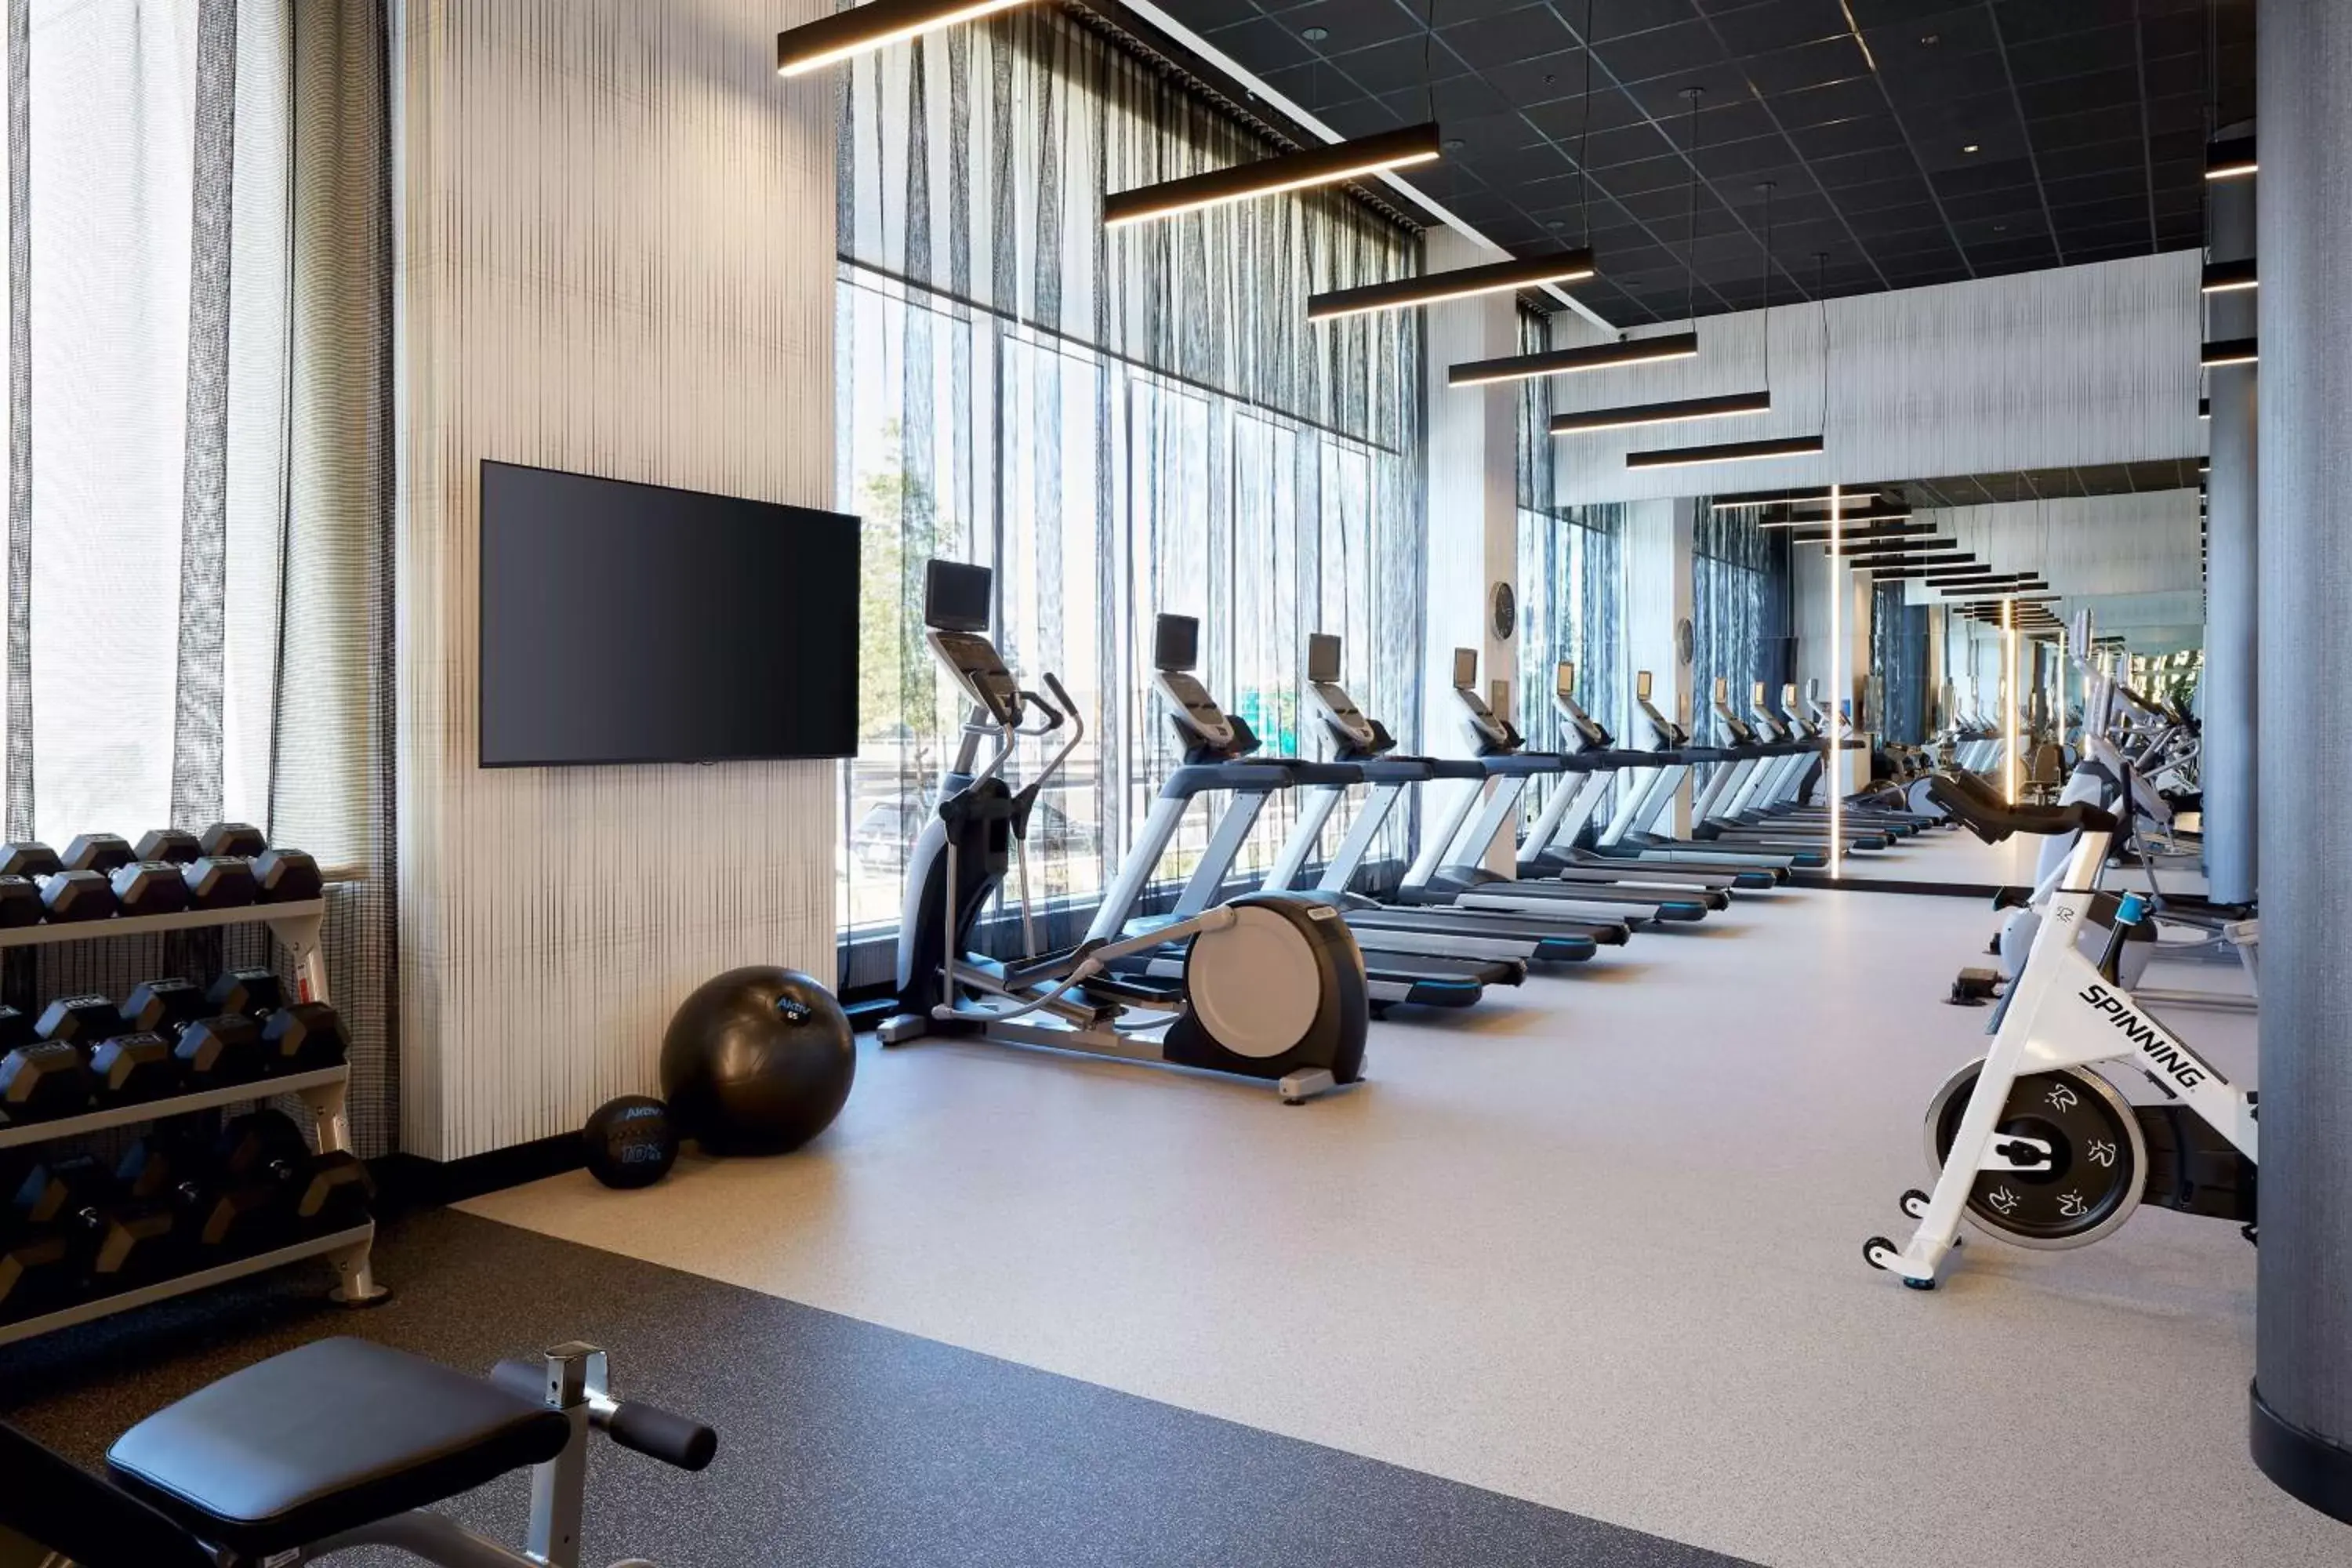 Fitness centre/facilities, Fitness Center/Facilities in Hilton Garden Inn Montreal Midtown, Quebec, Canada